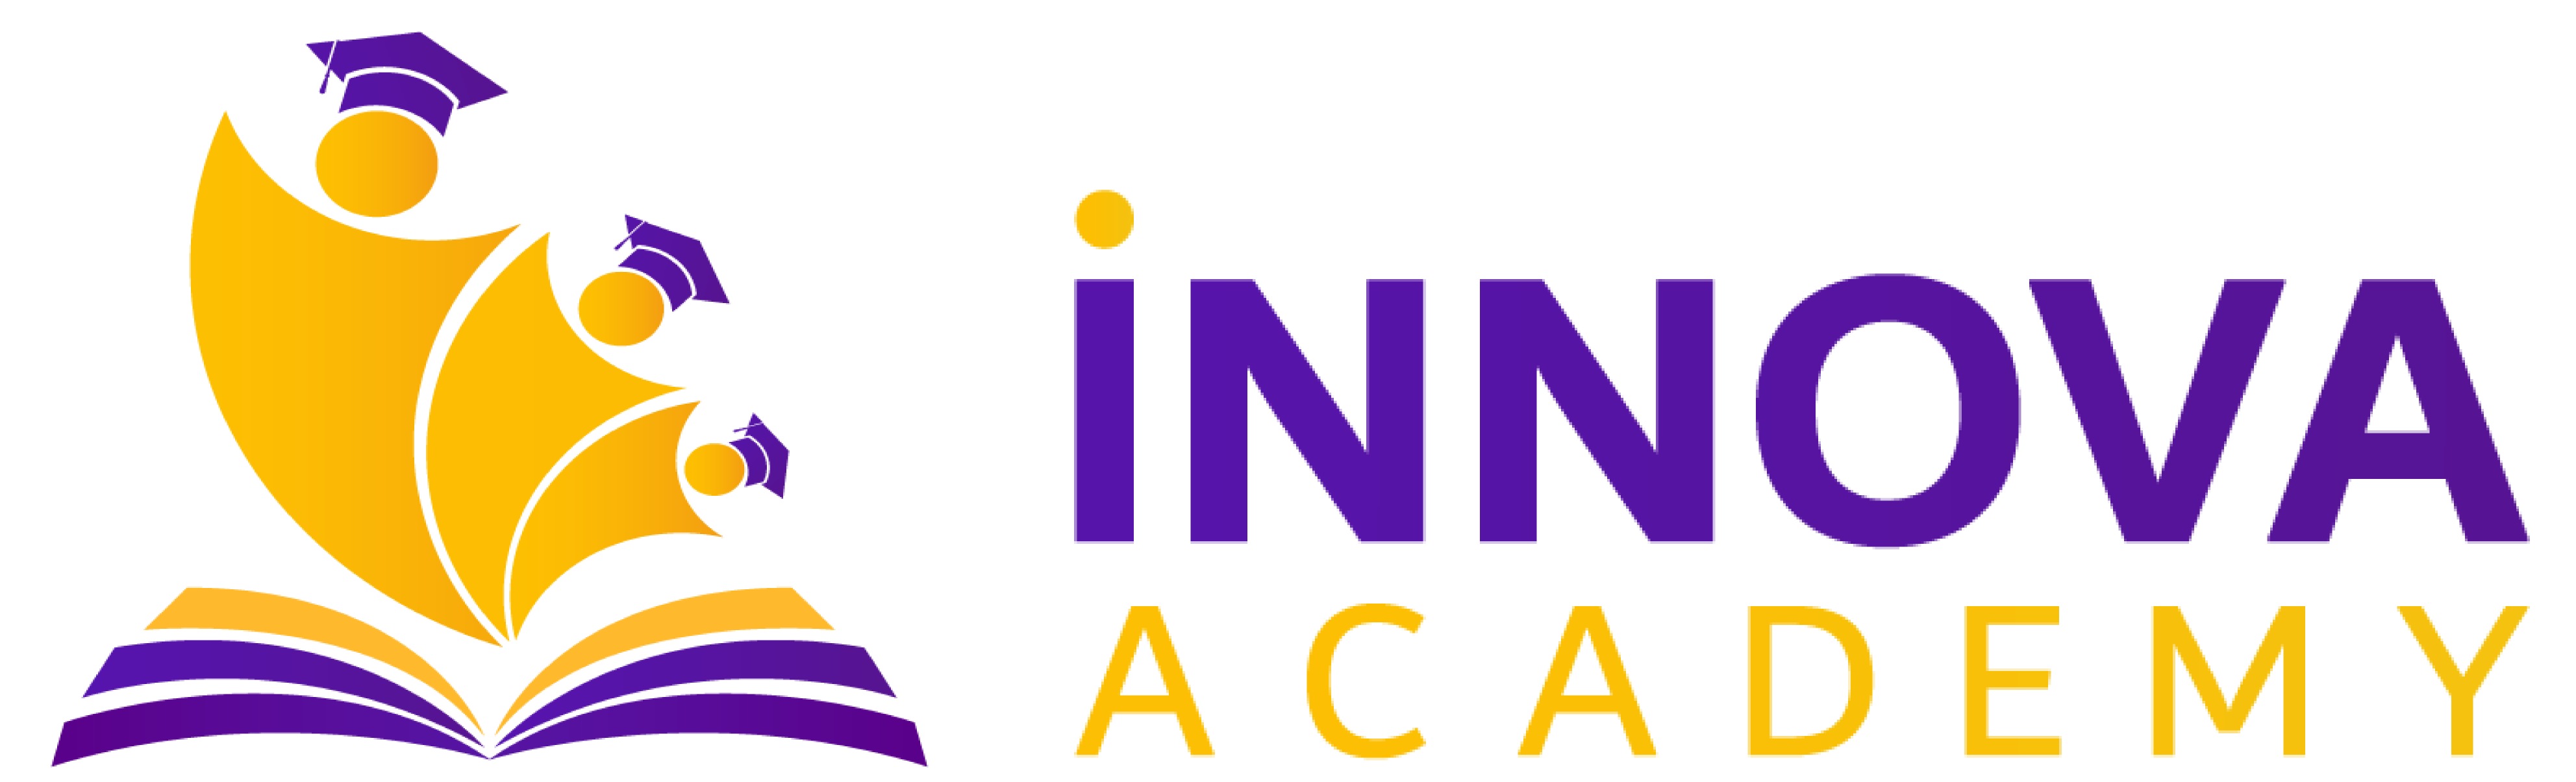 INNOVA Academy